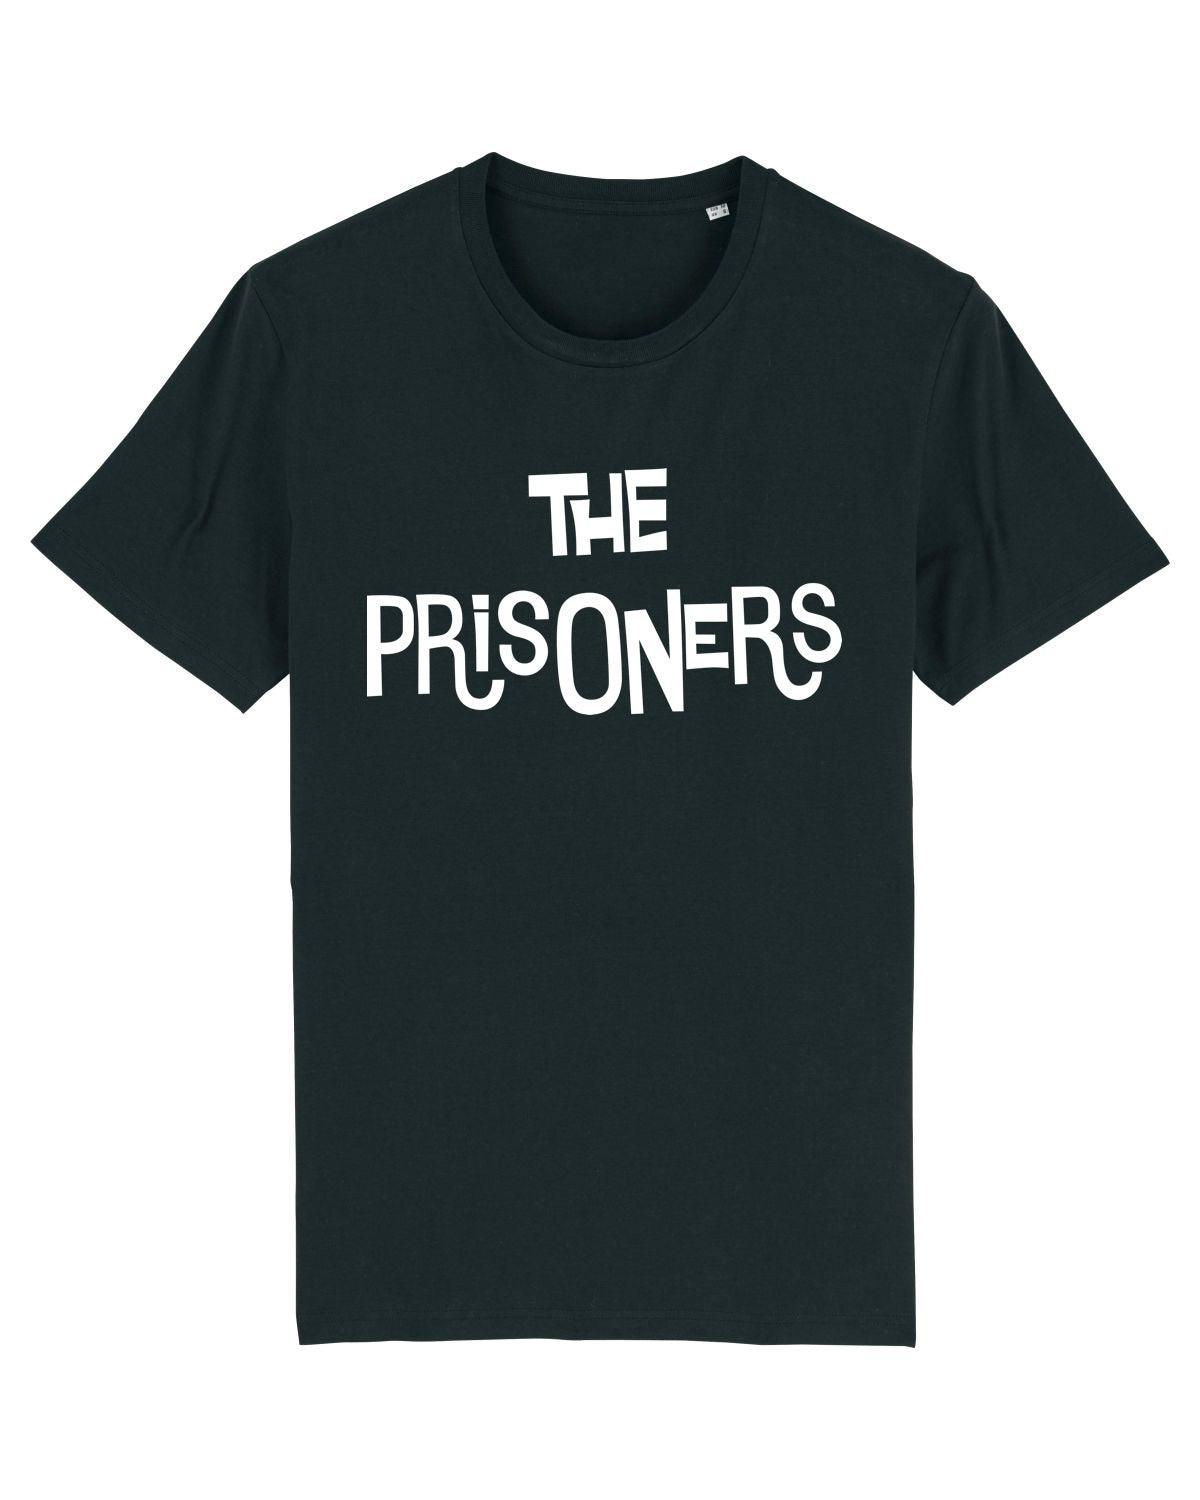 THE PRISONERS: Reunion Logo WHITE: T-Shirt Official Merchandise by Sound is Colour. - SOUND IS COLOUR